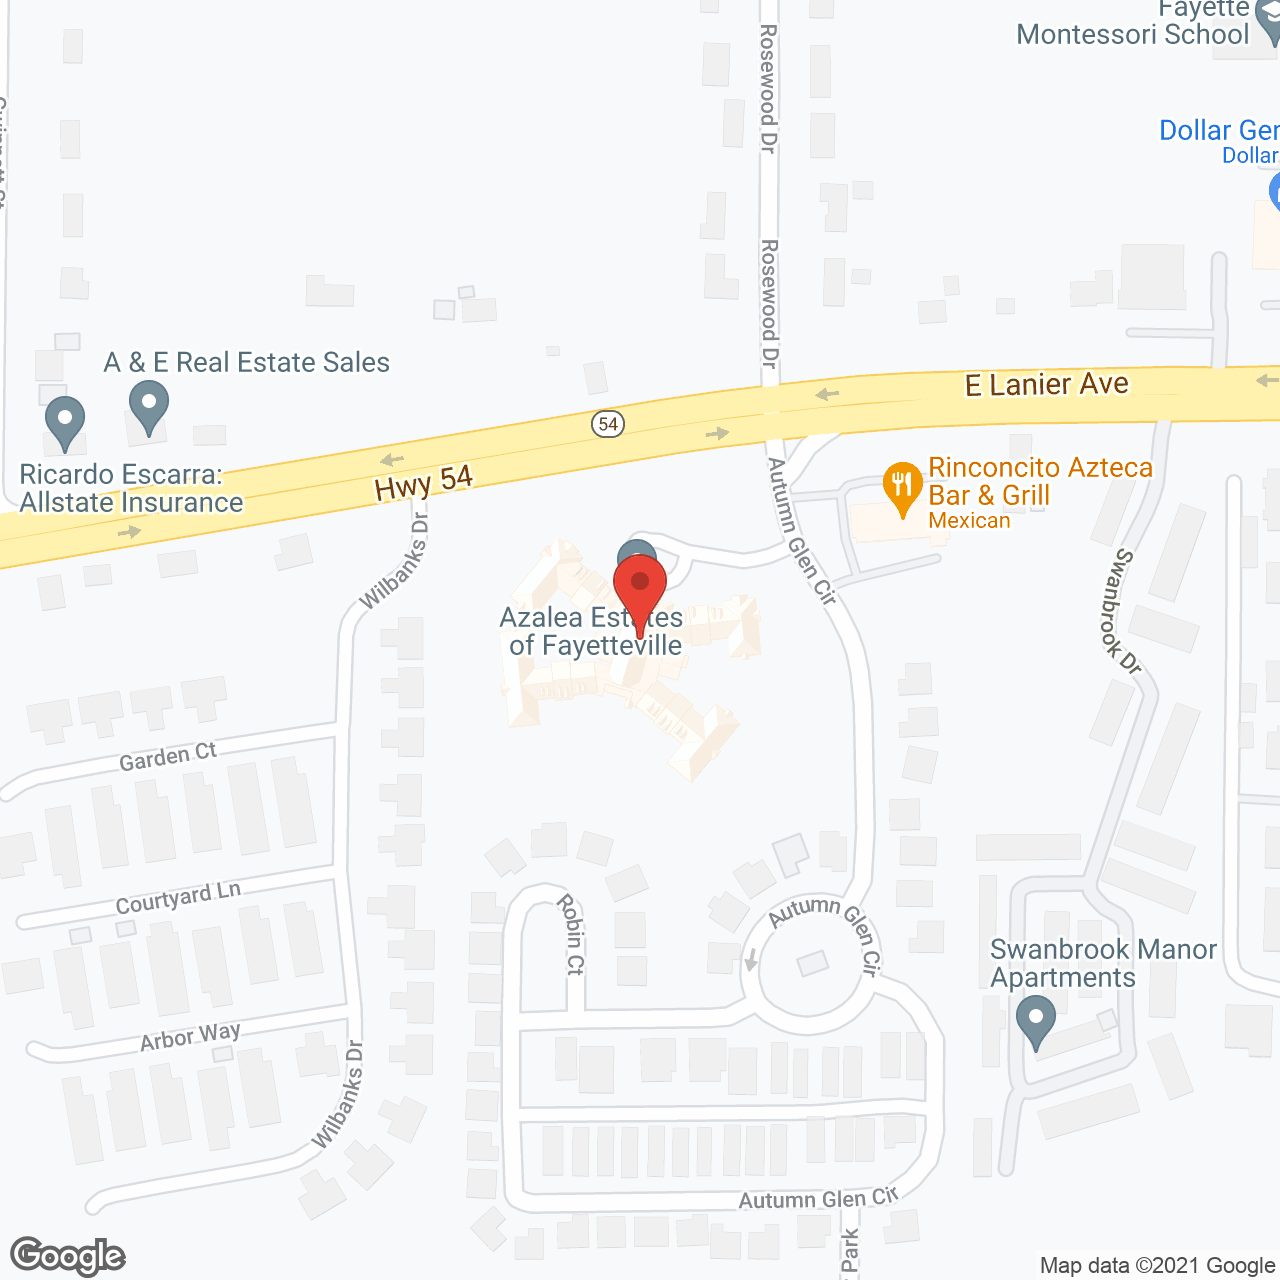 Azalea Estates of Fayetteville in google map